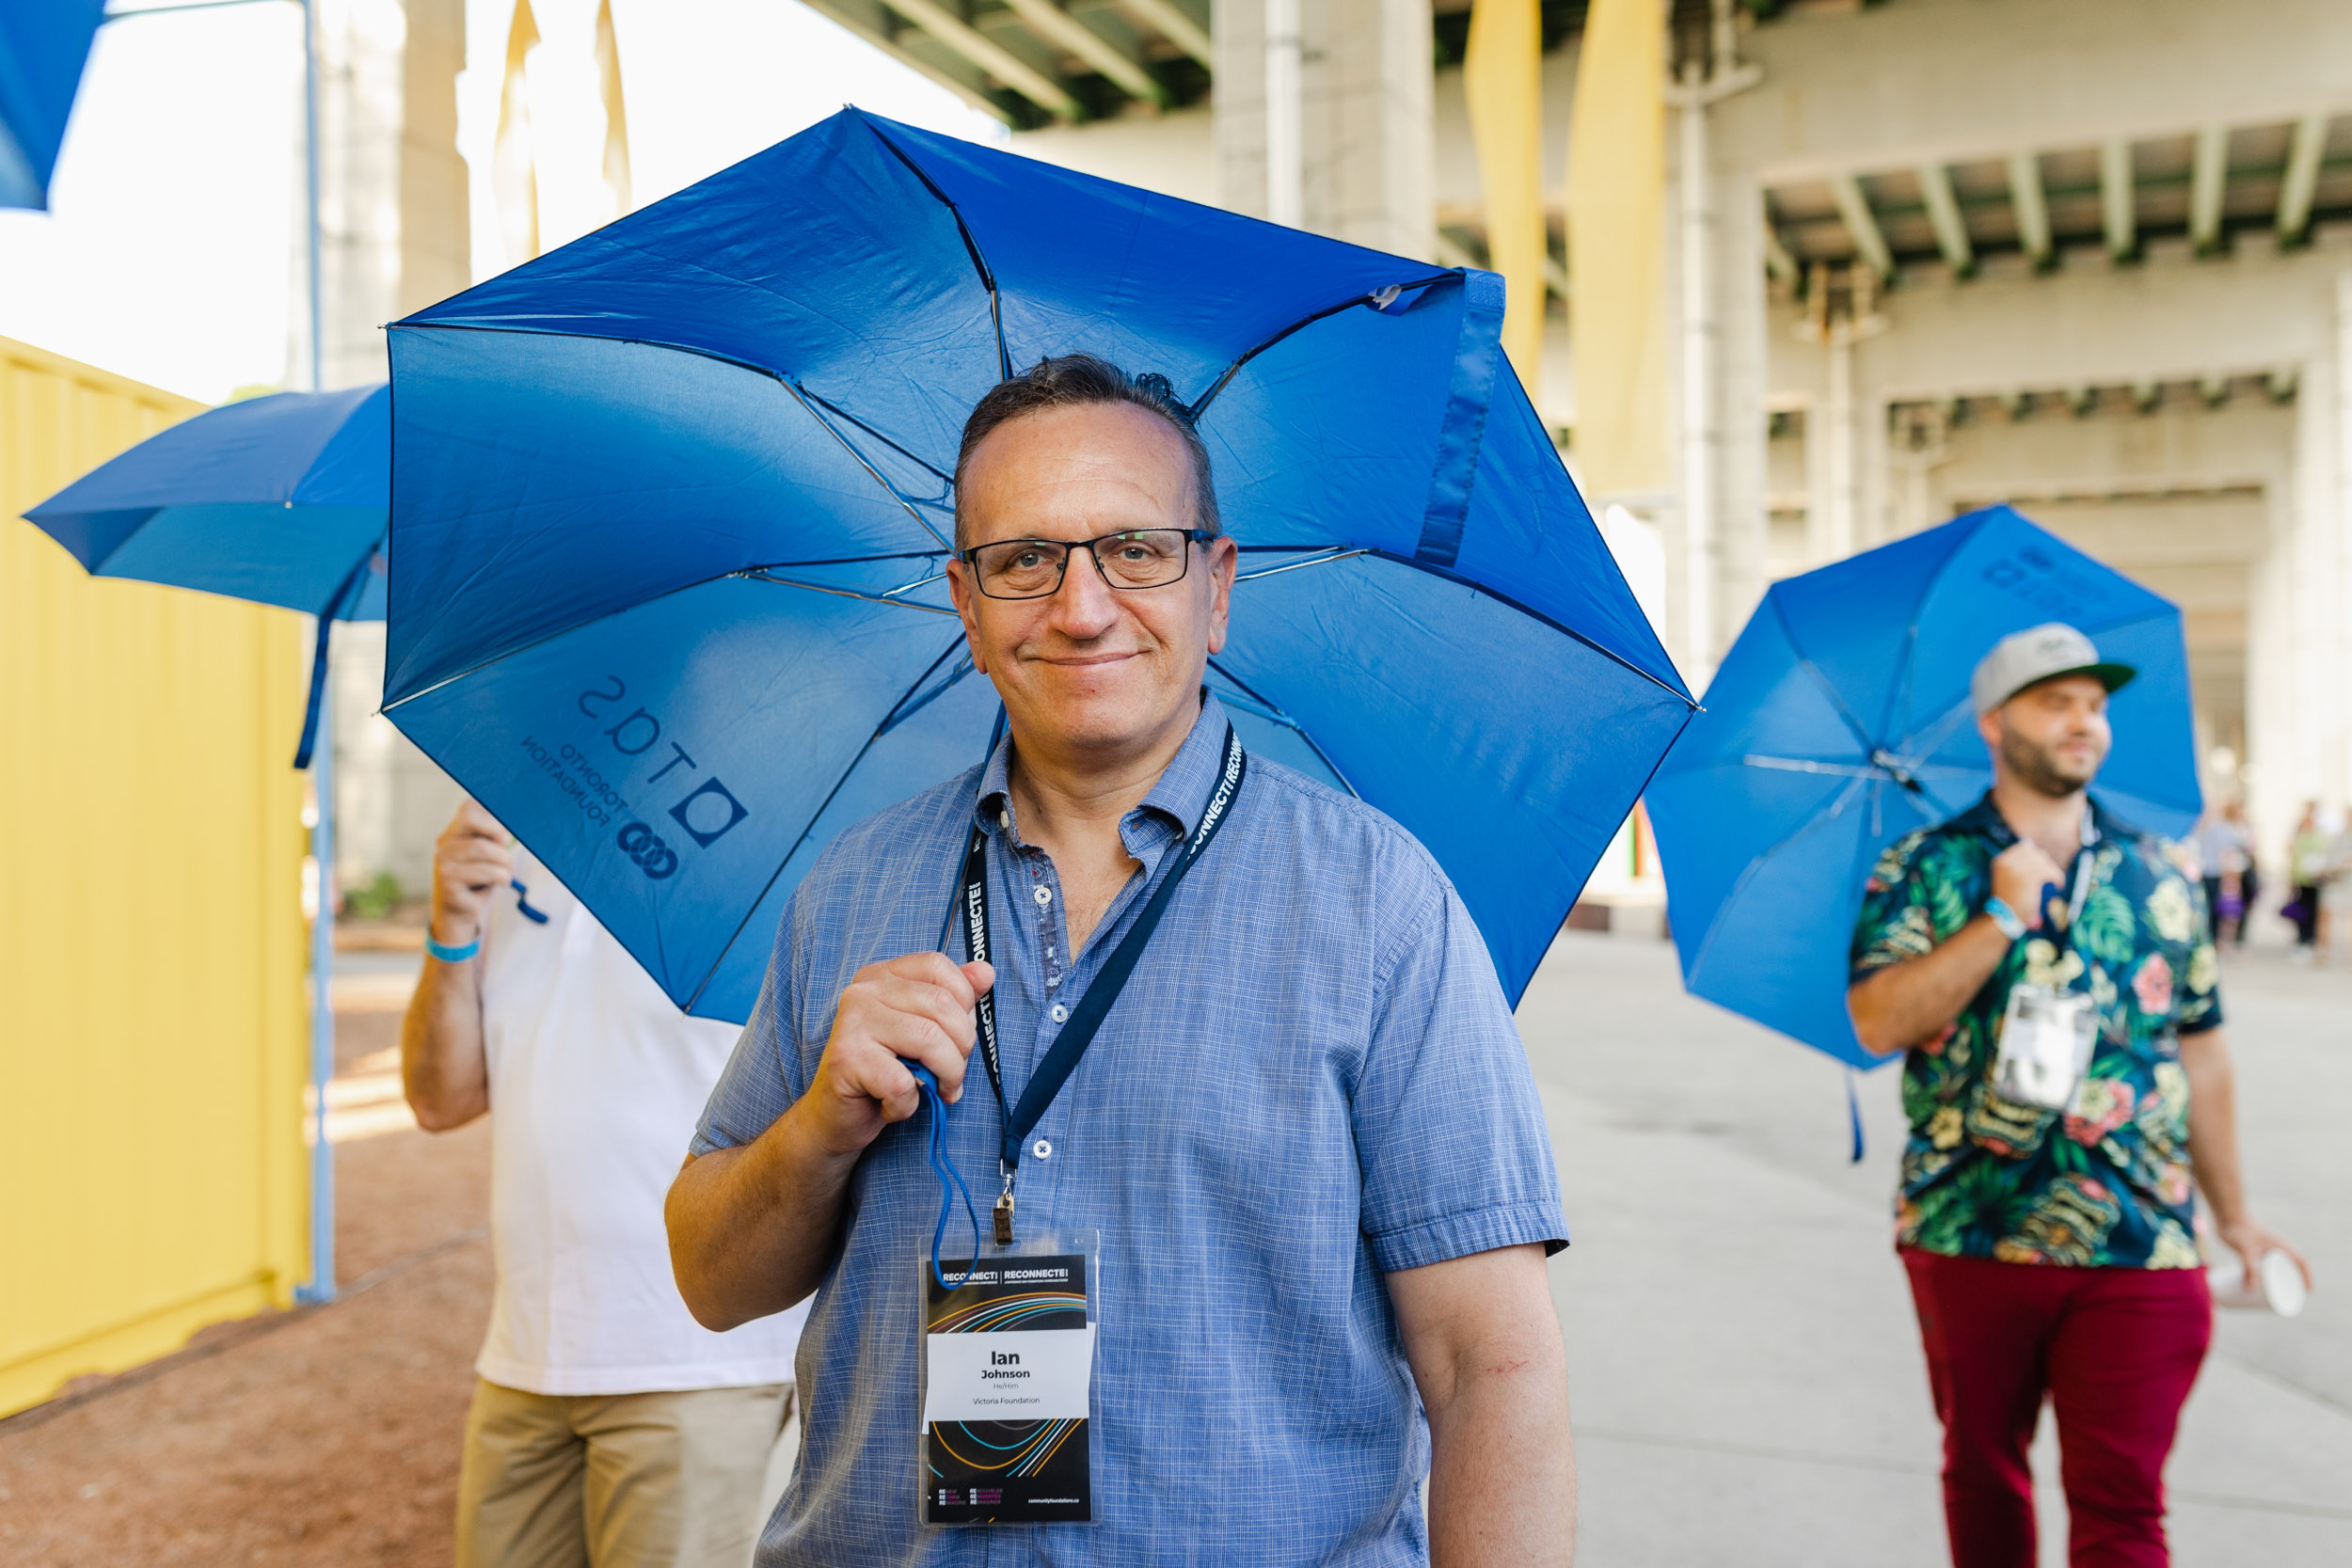 A man holding a blue umbrella at a conference.